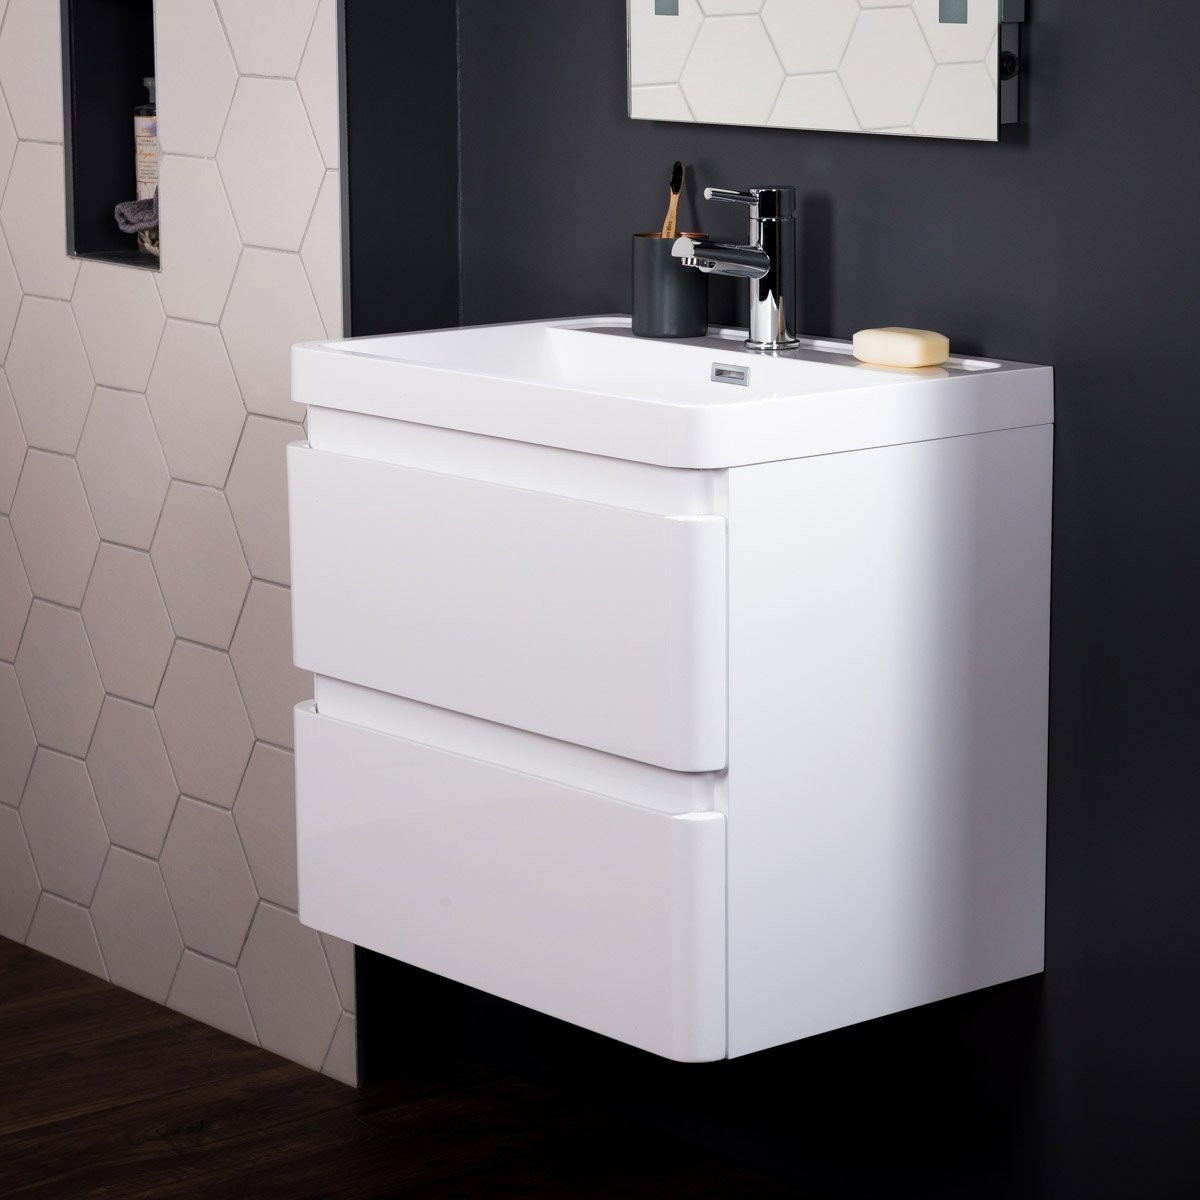 Bathroom Wall Units
 600 mm White Modern Bathroom Wall Hung Vanity Basin Sink